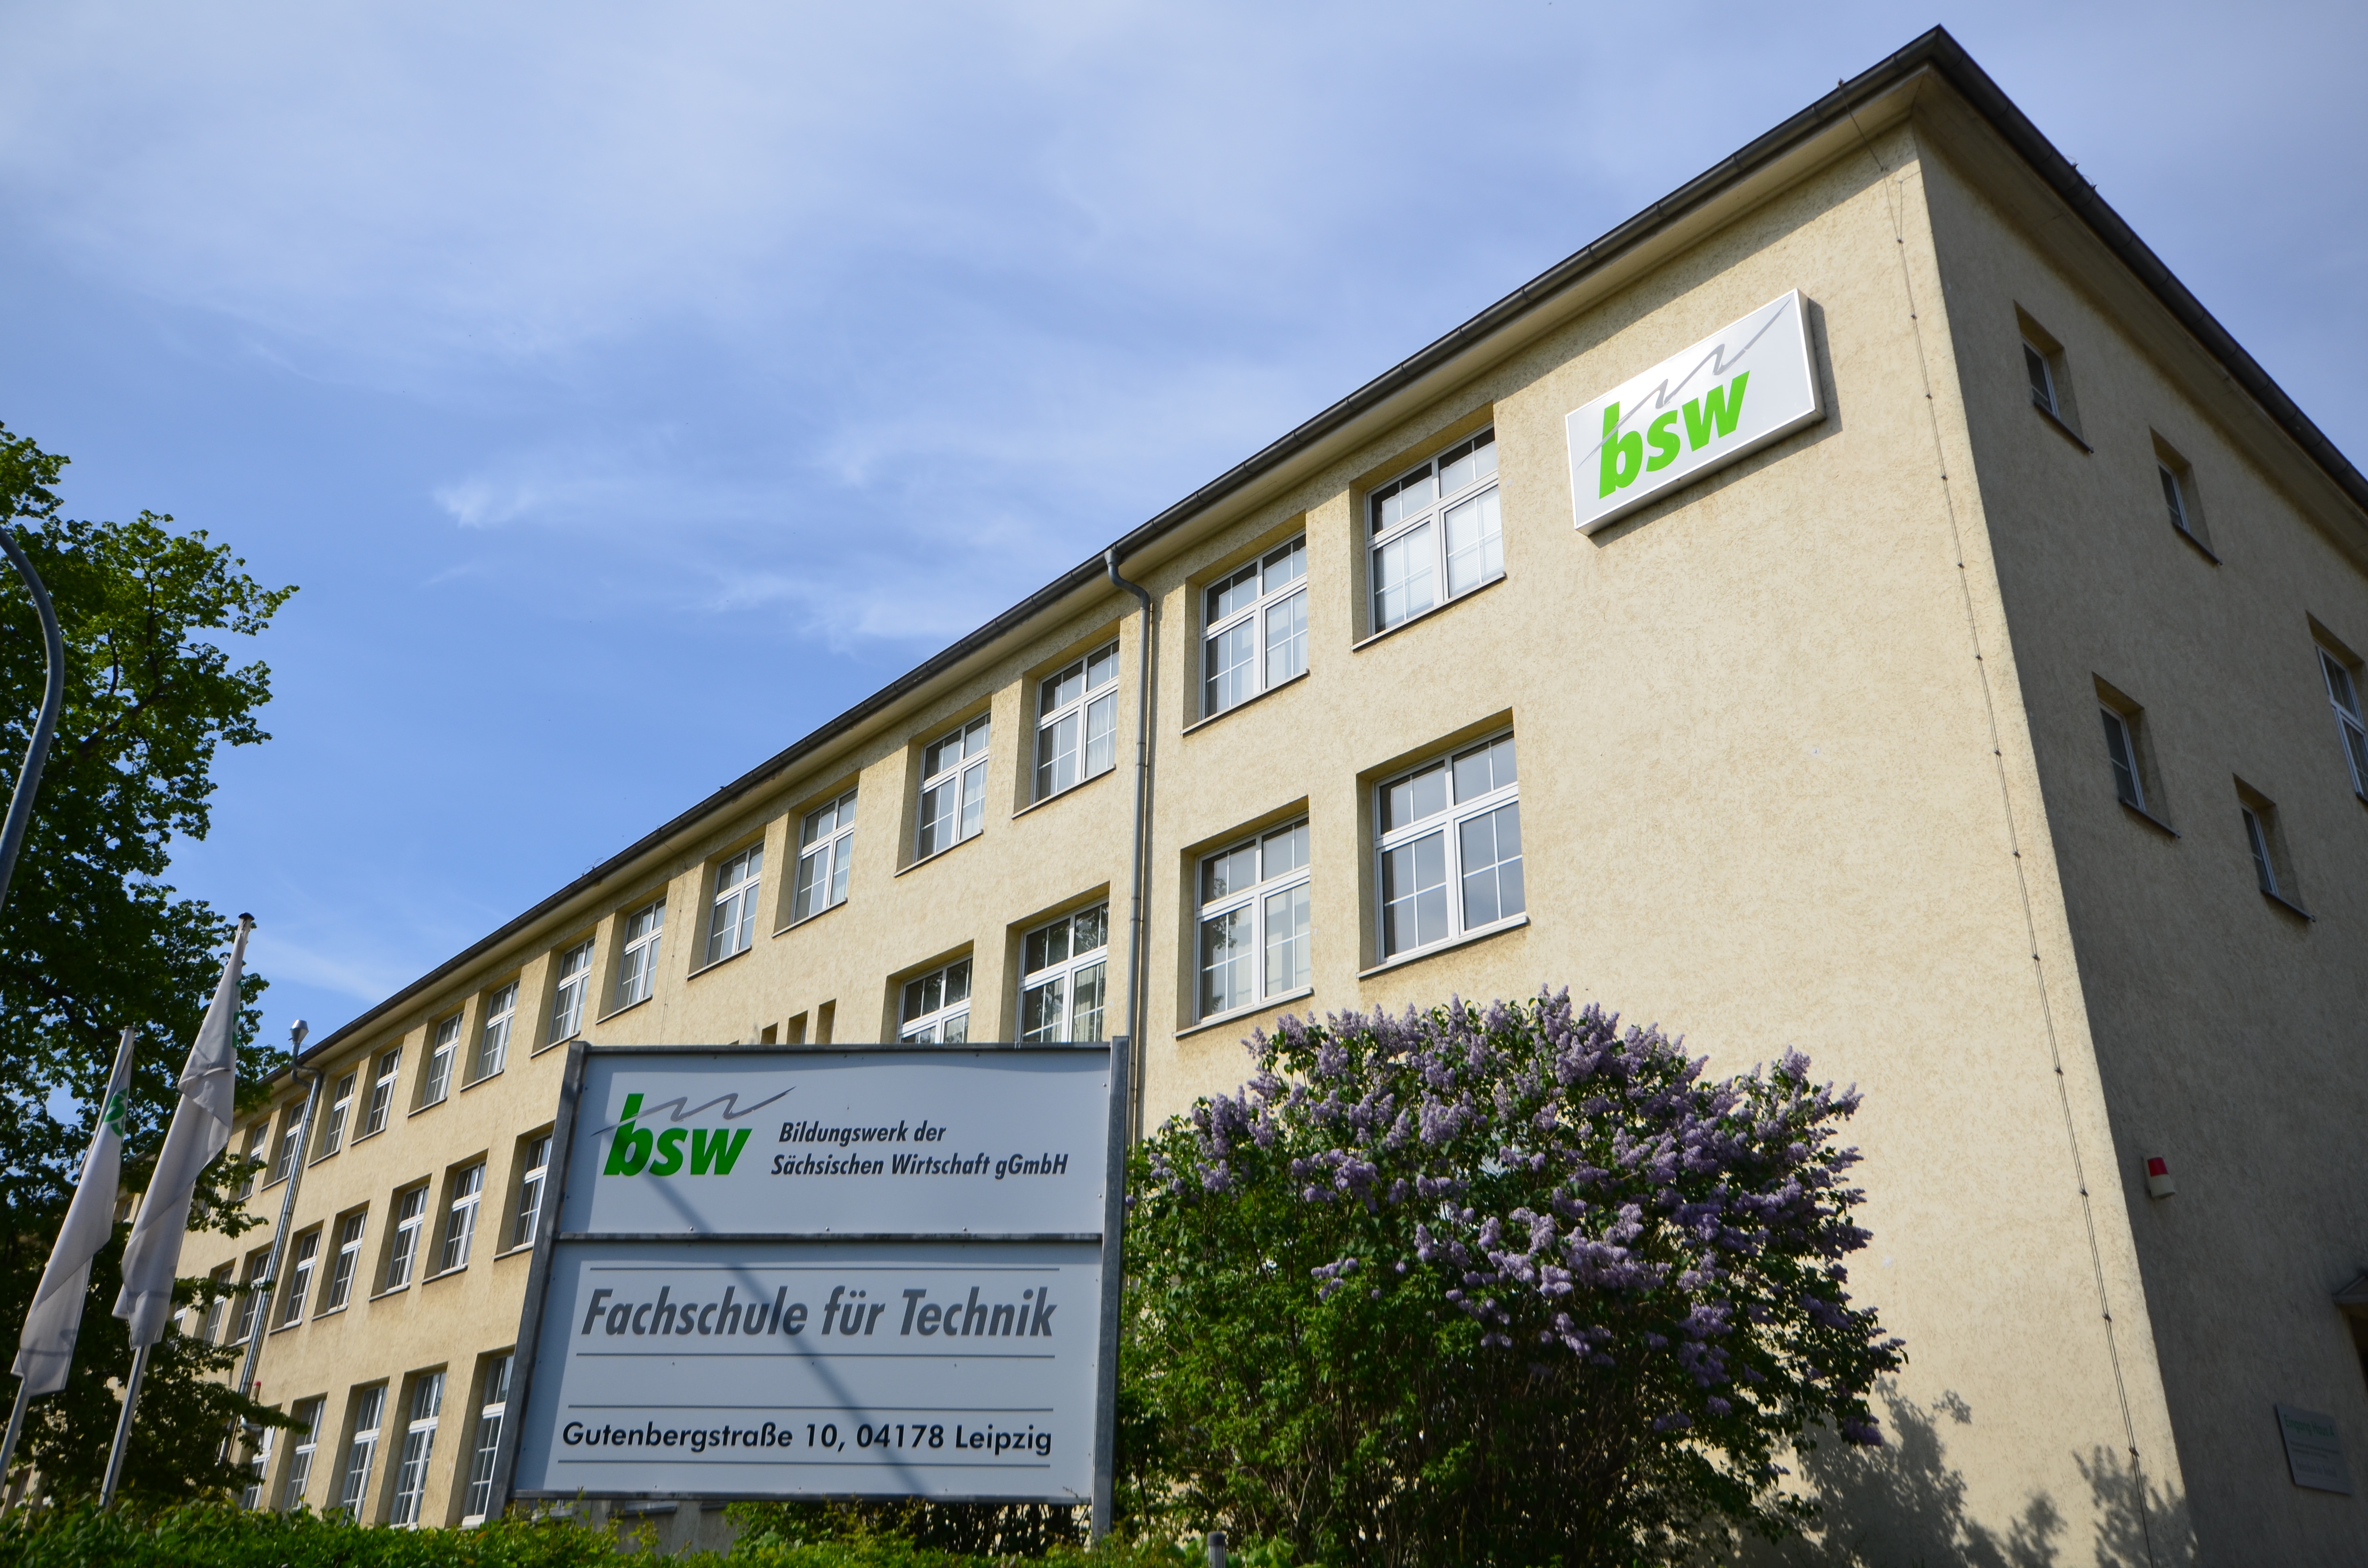 bsw-Fachschule für Technik Technikerschule Fahrzeugtechnik Leipzig